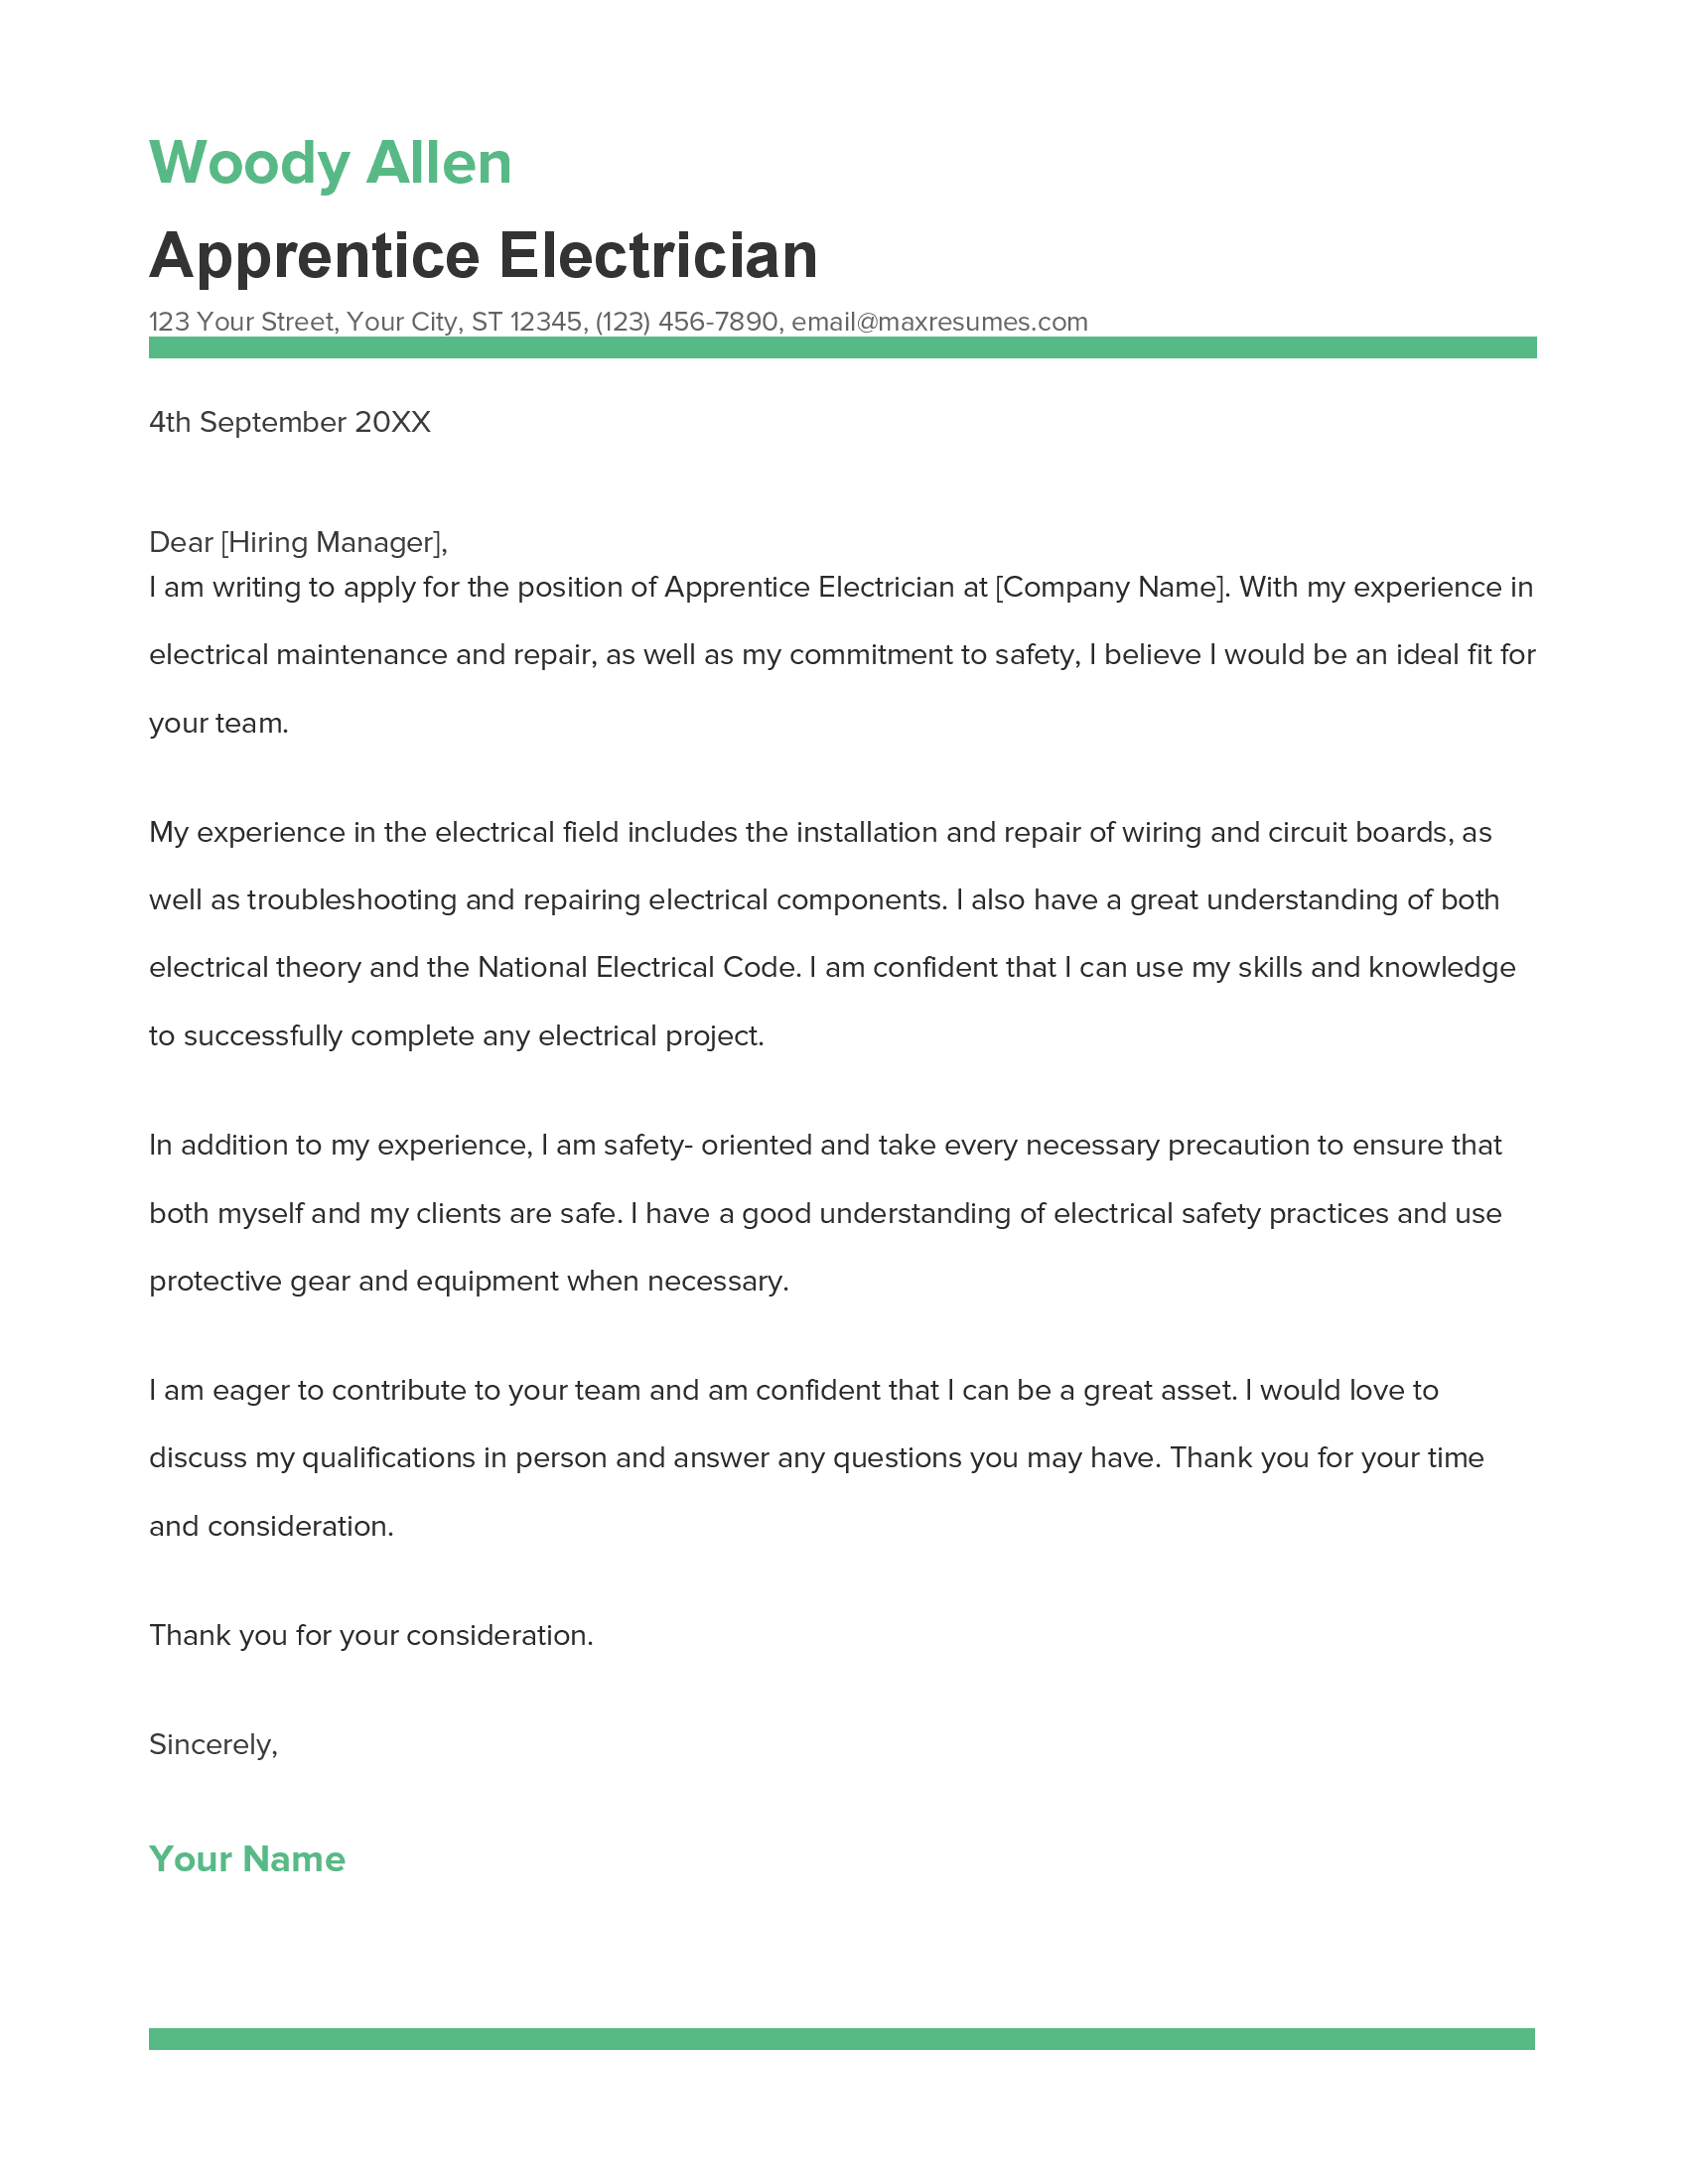 Apprentice Electrician Cover Letter Sample 